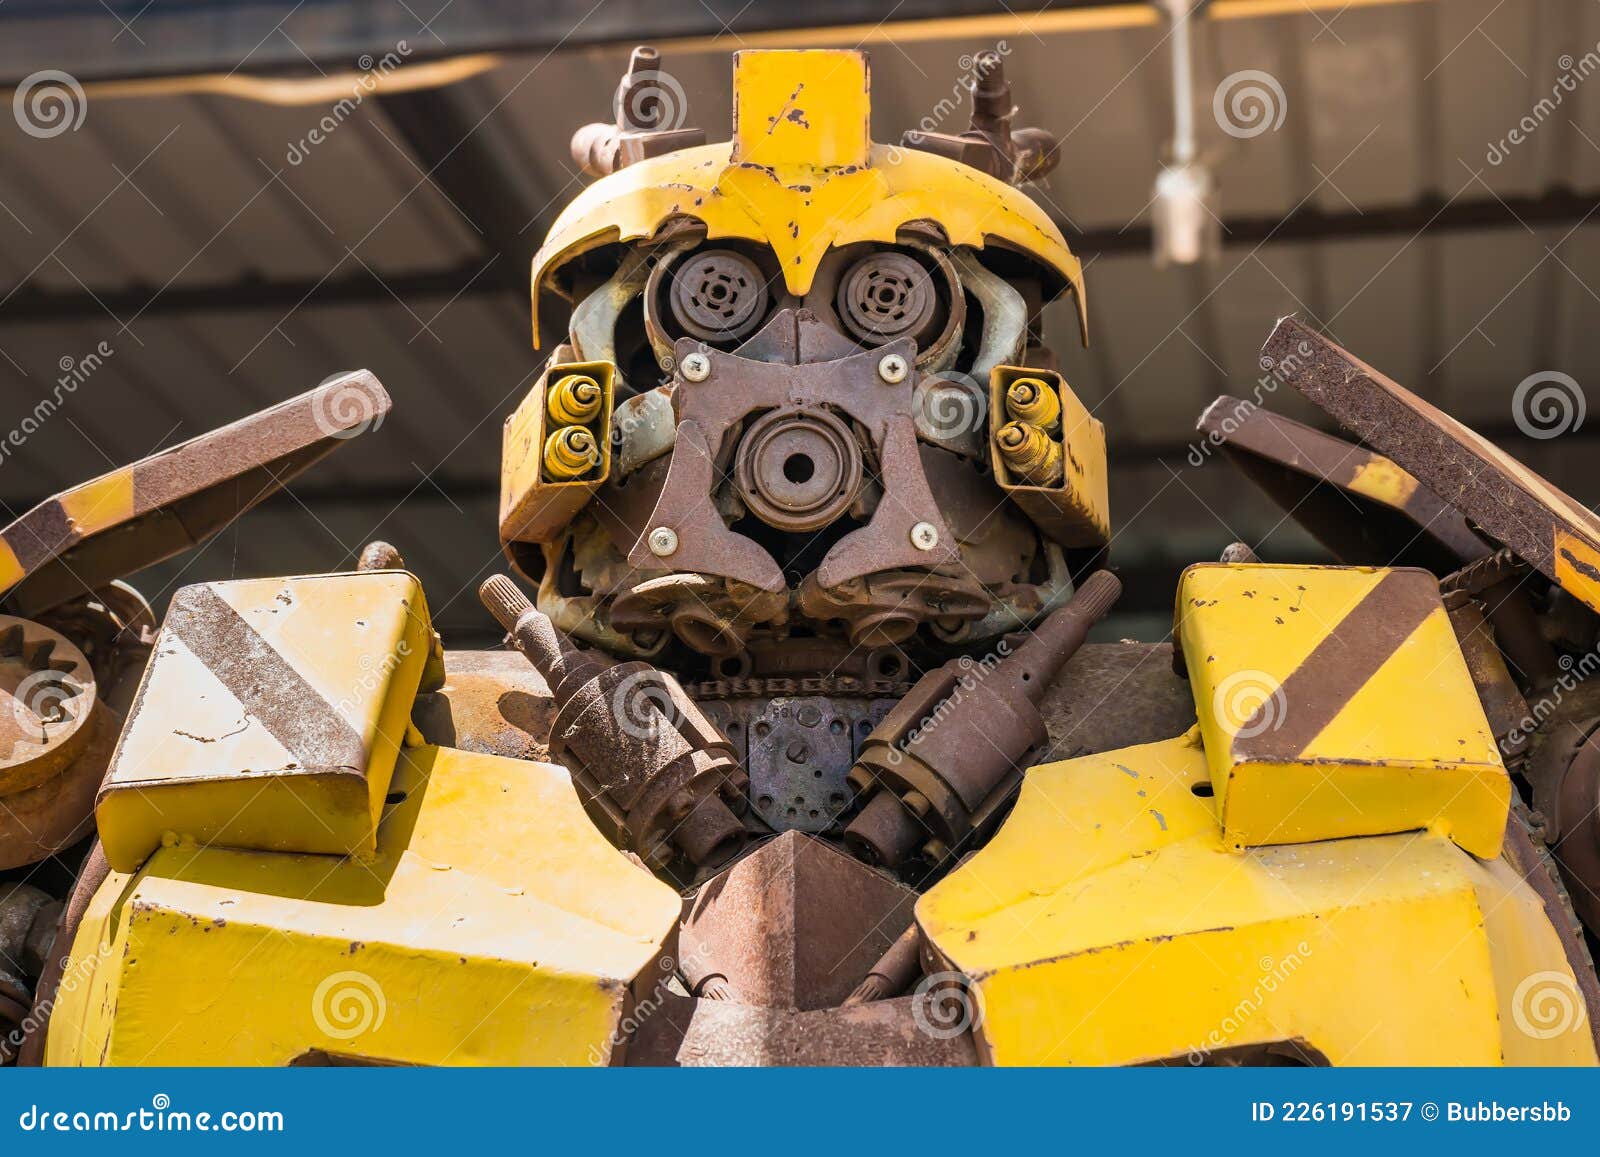 357 Transformers Bumblebee Stock Photos - Free & Royalty-Free